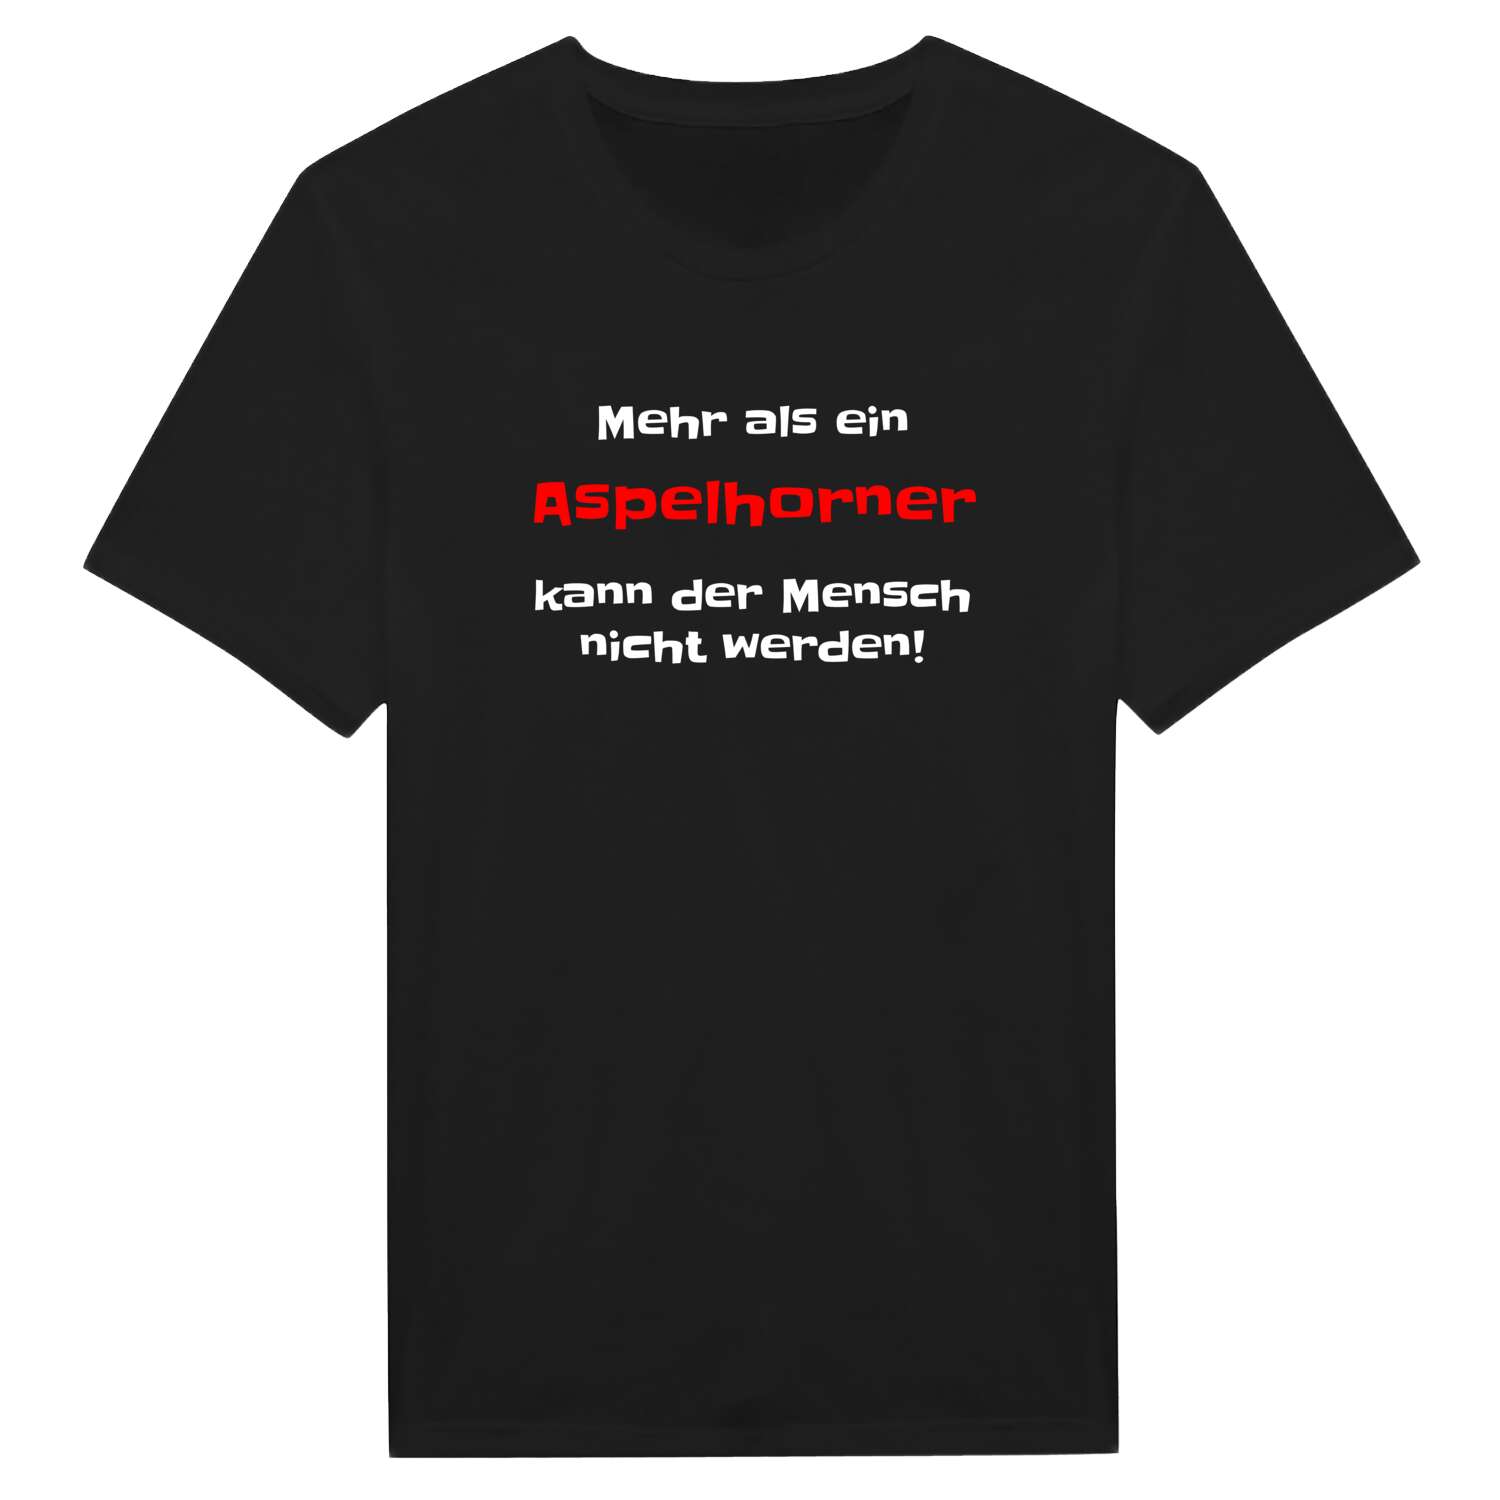 Aspelhorn T-Shirt »Mehr als ein«